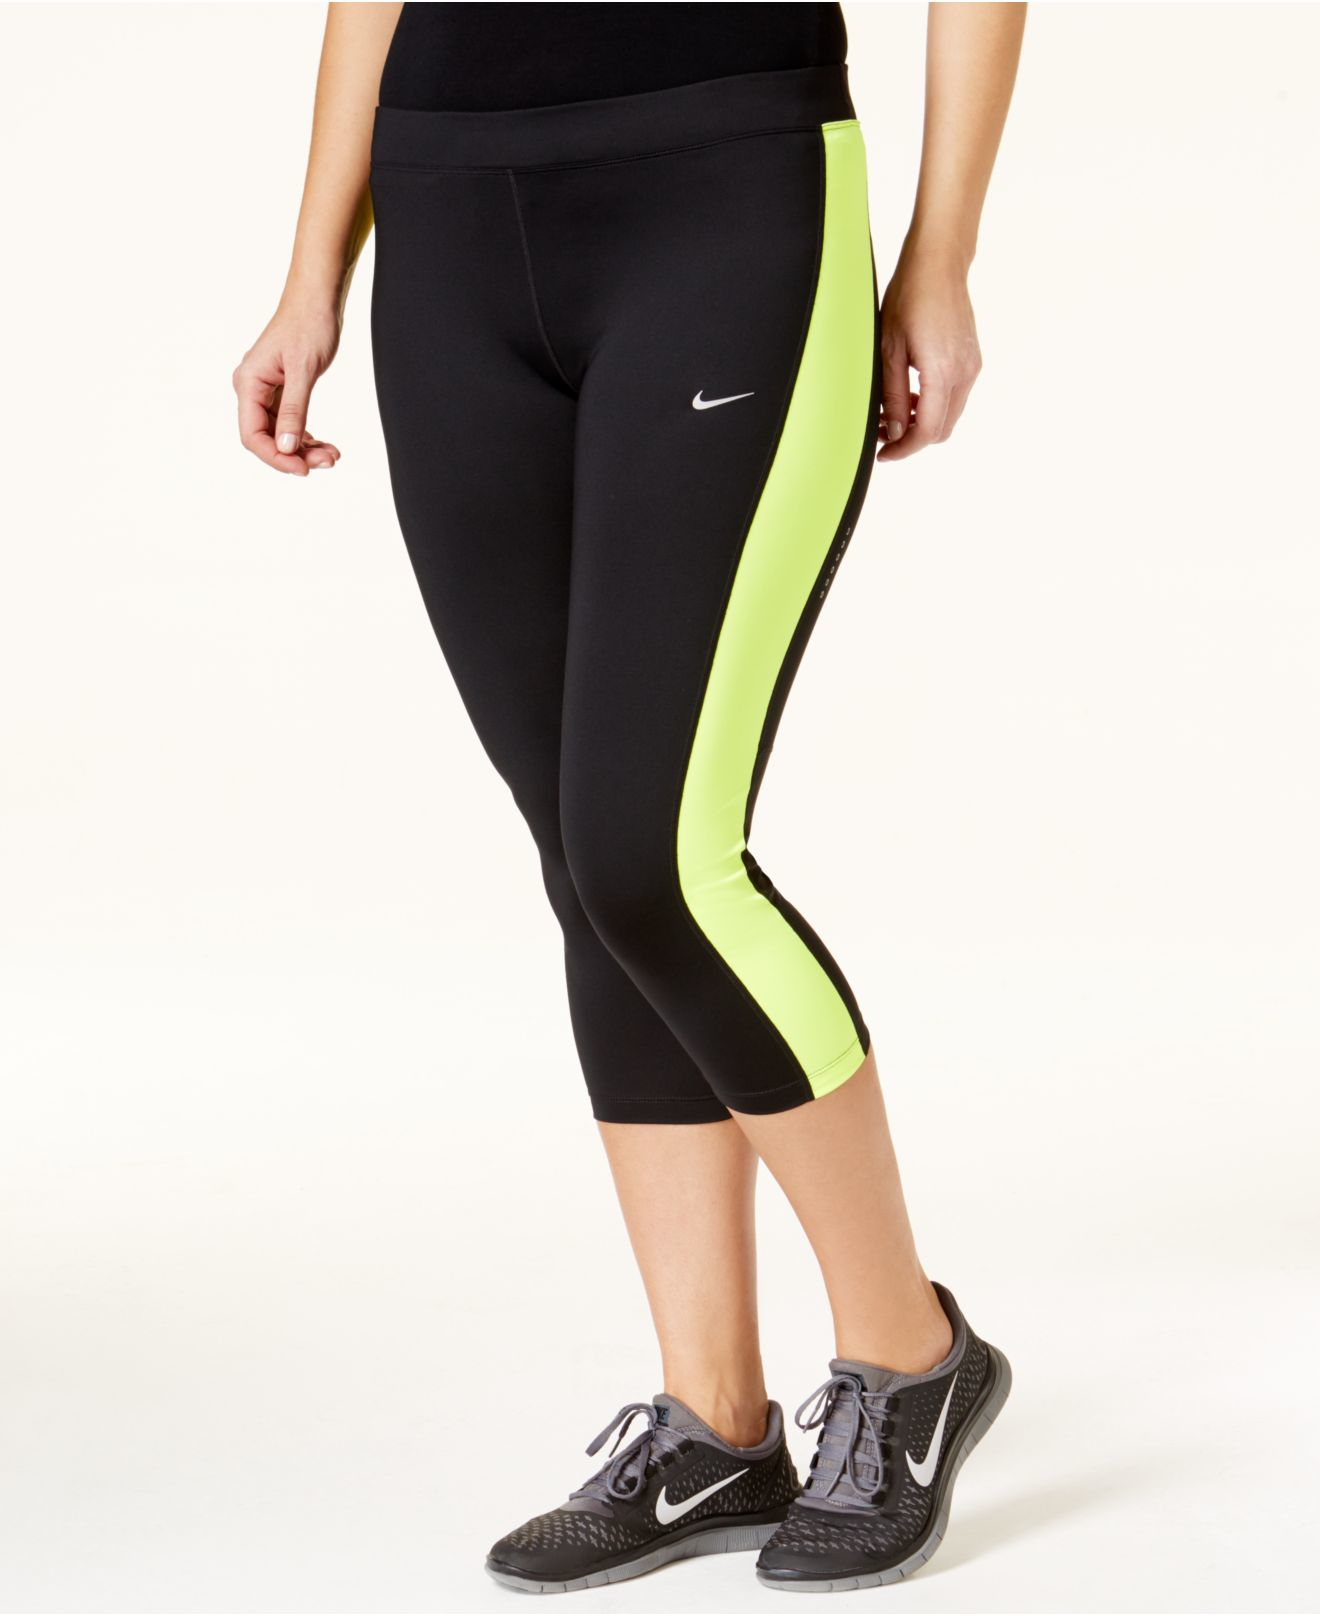 Nike Plus Size Crop Leggings Clearance, SAVE 37% - mpgc.net